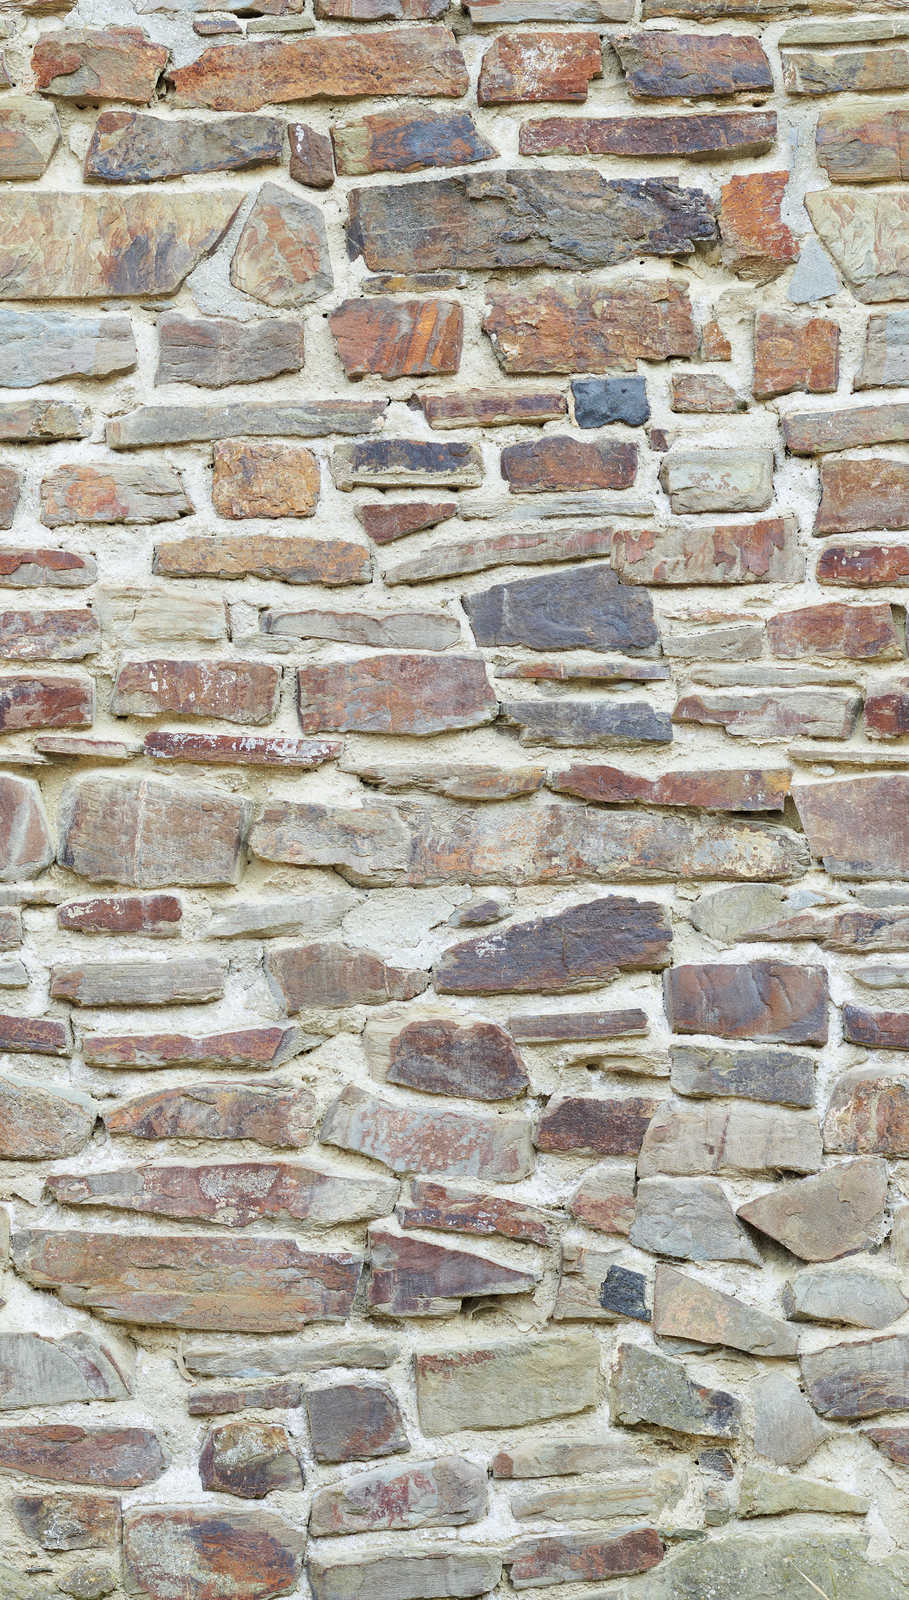             Classic Stone Wall Optics Wallpaper in Light Colours - Beige, Brown, Cream
        